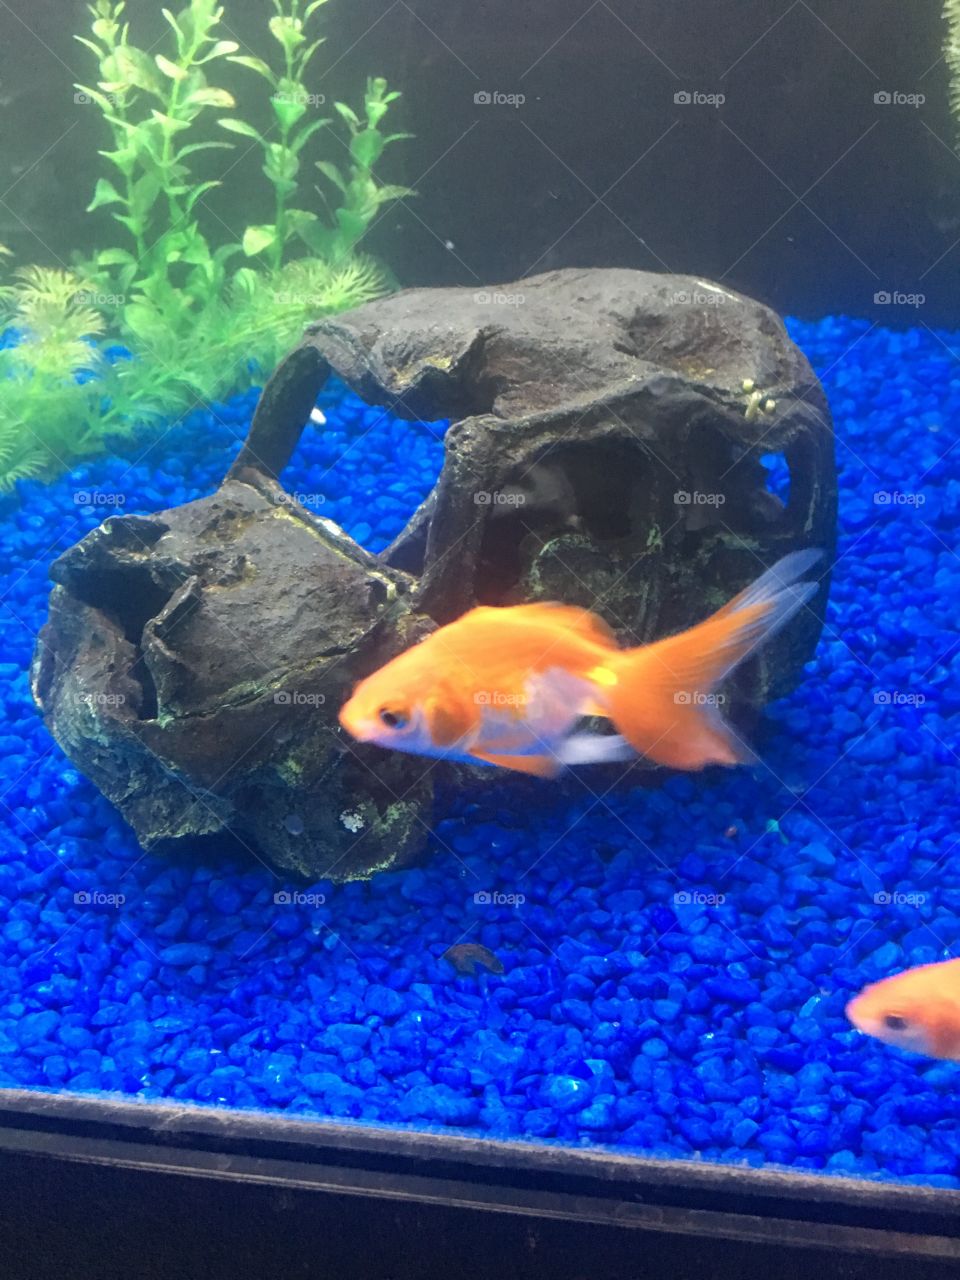 Fish in an aquarium at the pet store 